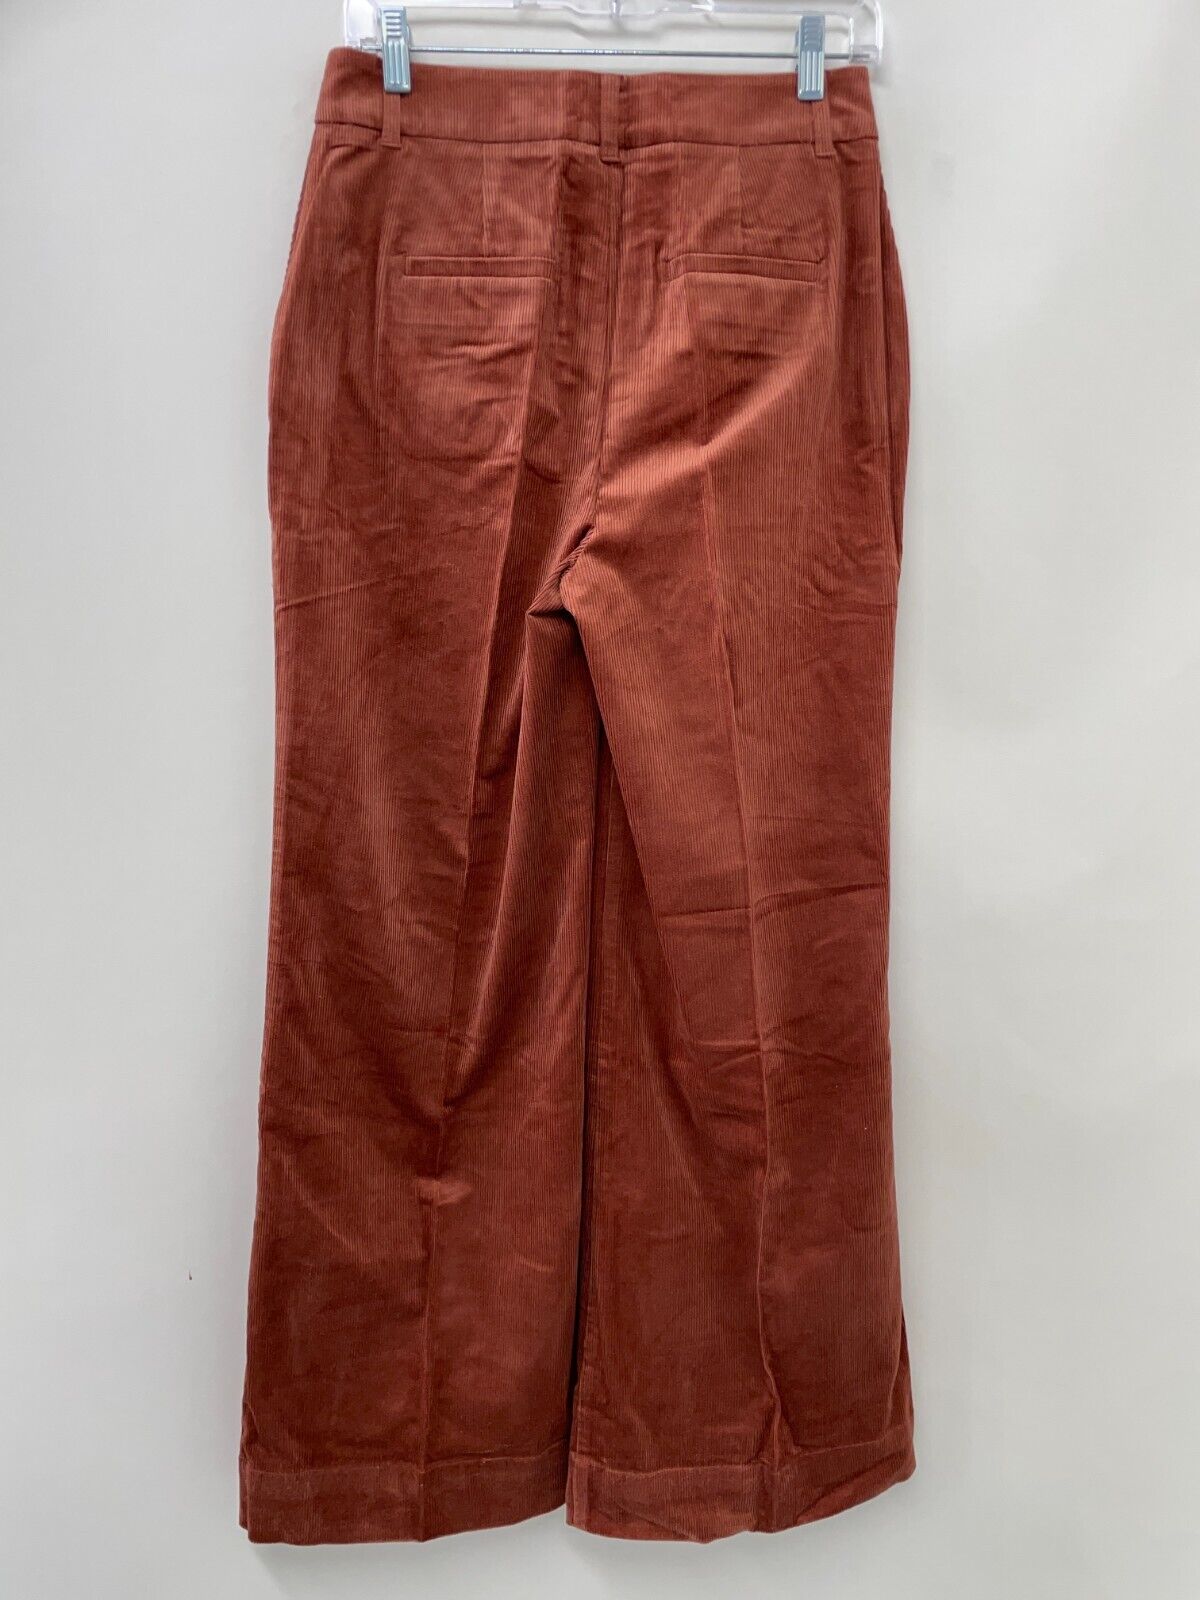 Boden Womens 6 Wide-Leg Corduroy Trousers Red Oak Regular Fit R0423-MBR